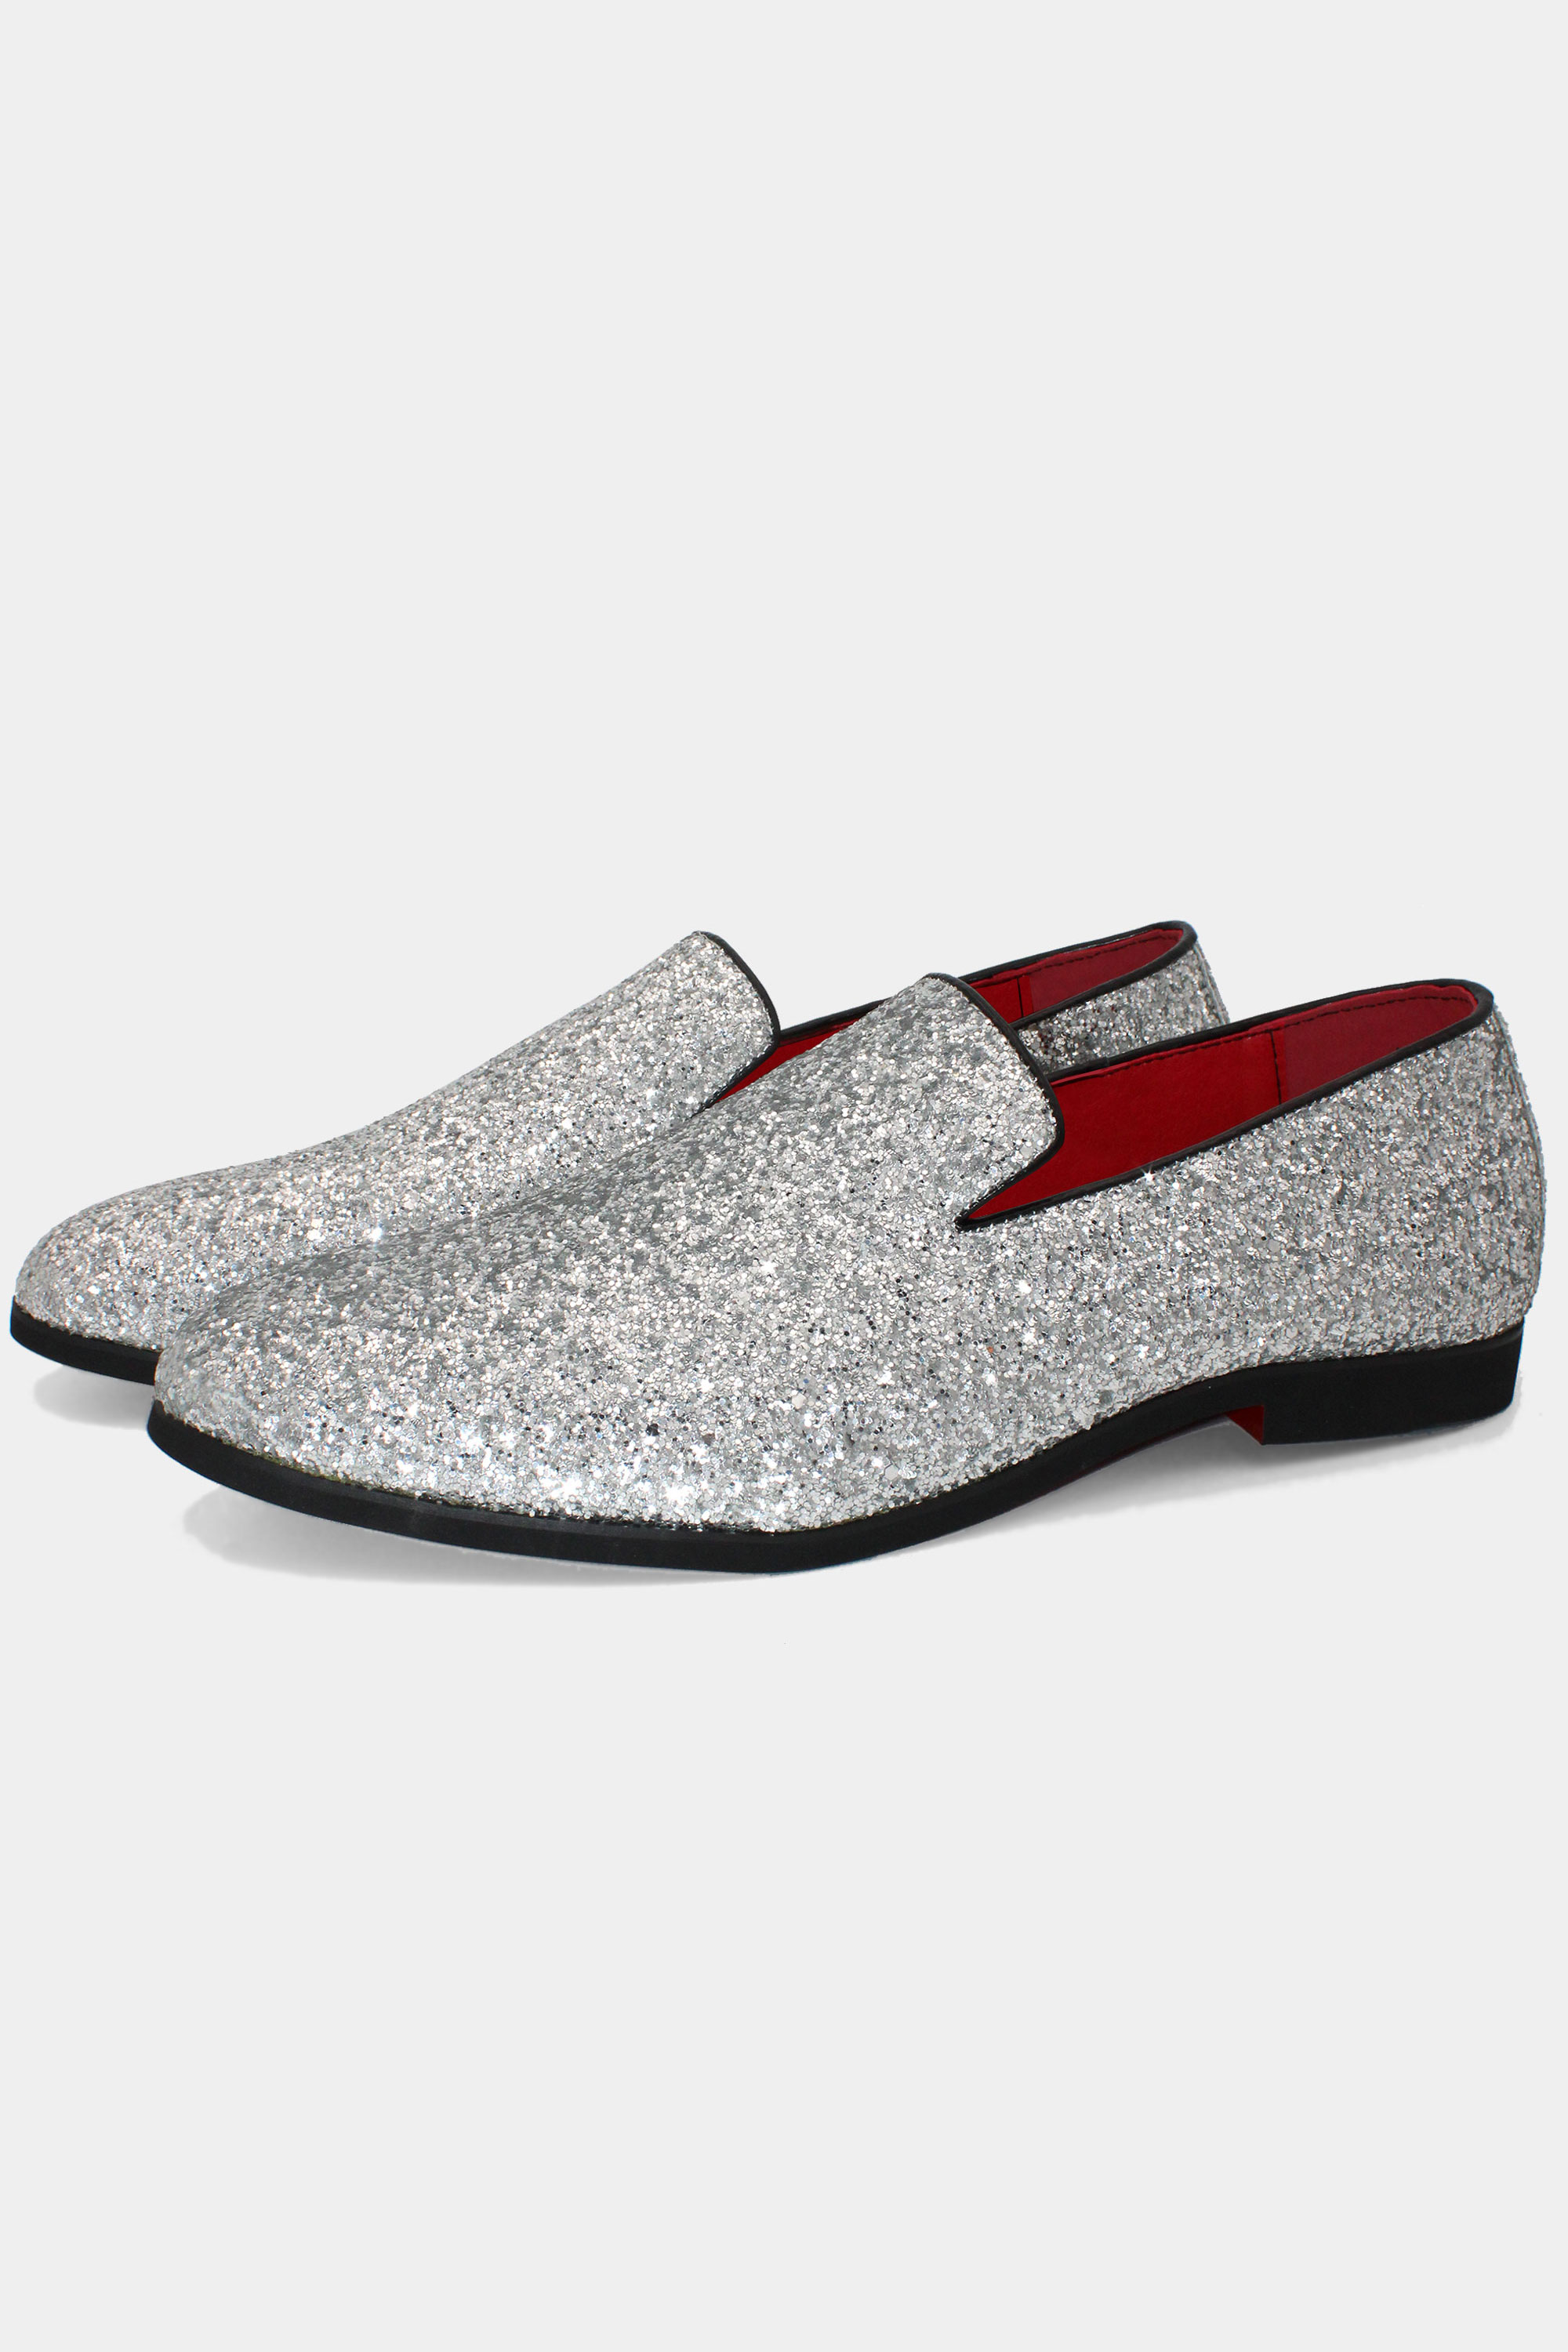 Mens-Silver-Glitter-Shoes-Loafer-Groom-Wedding-Shoes-from-Gentlemansguru.com